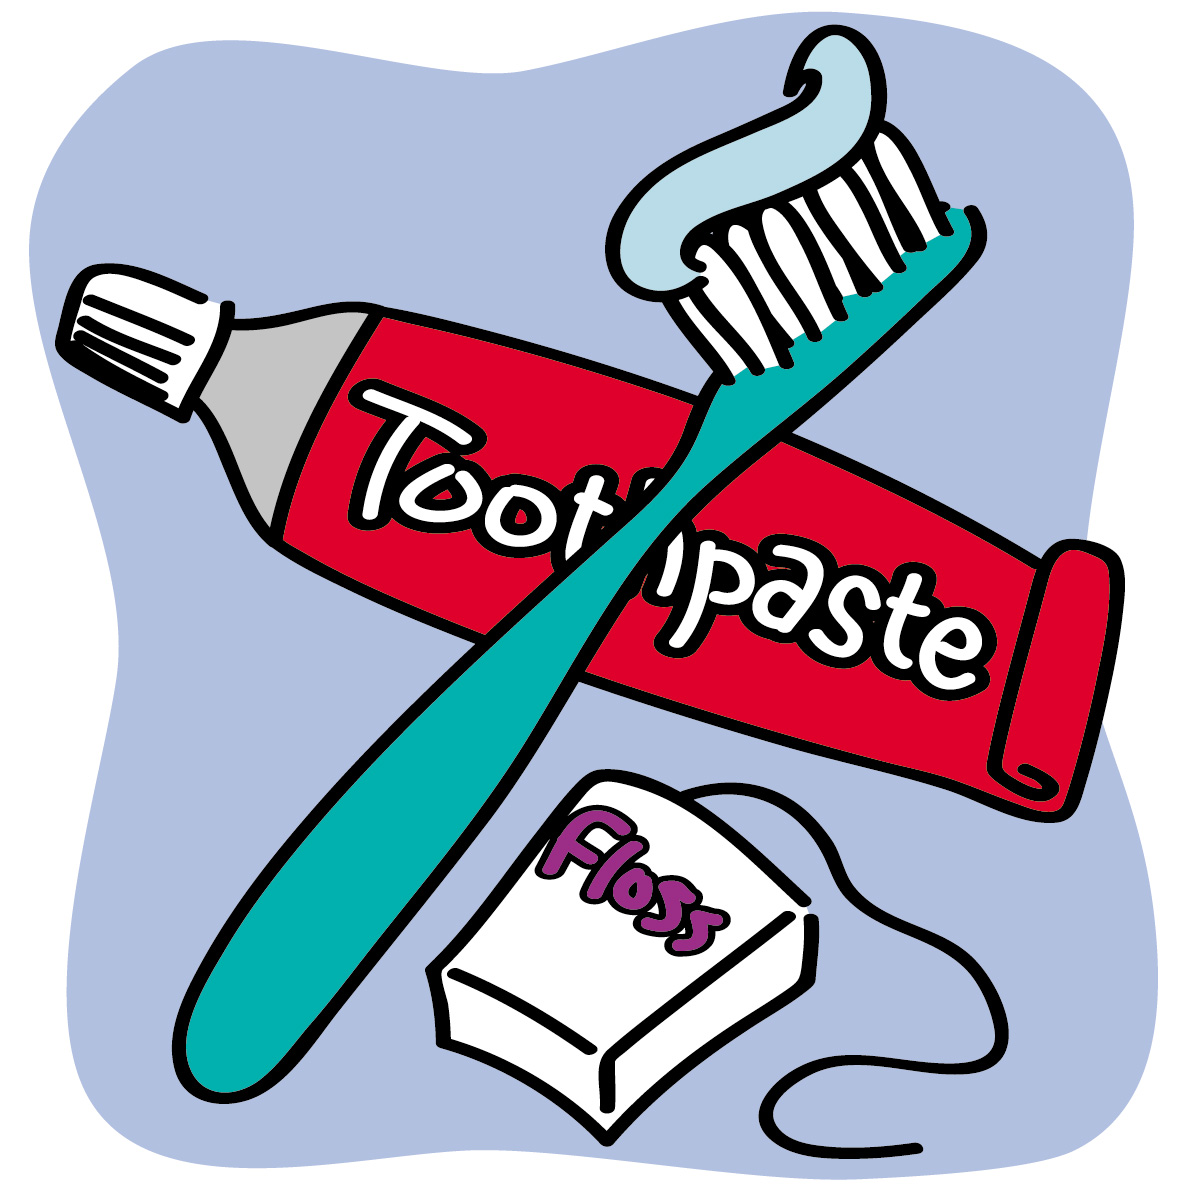 Dental Cartoon Images | Free Download Clip Art | Free Clip Art ...